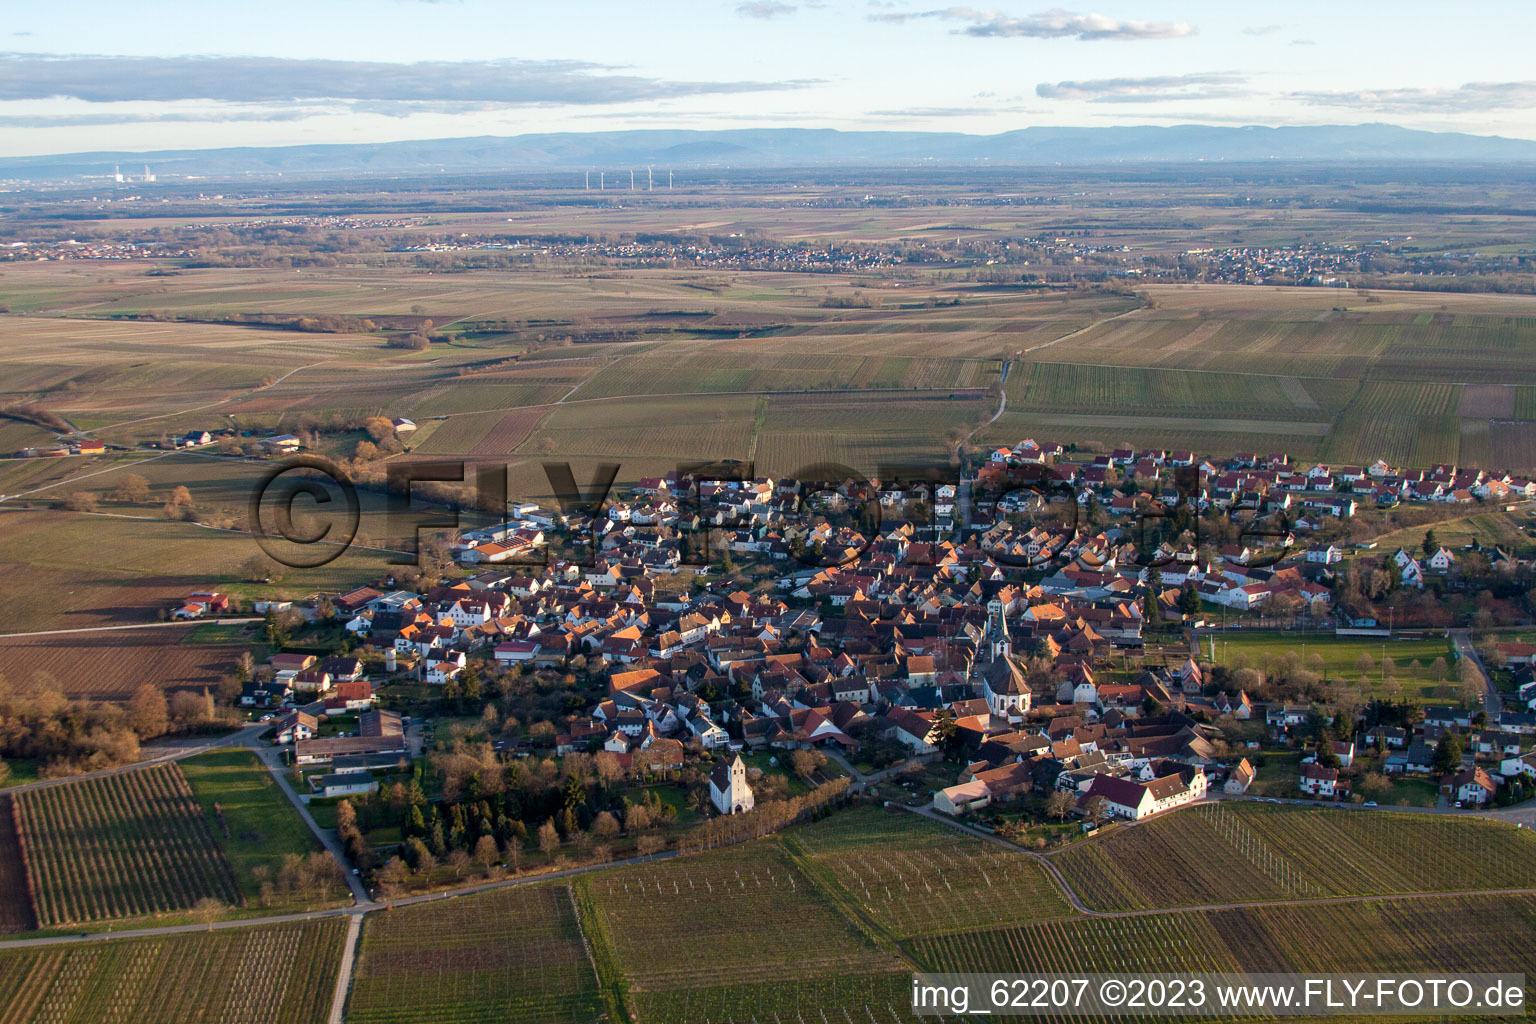 District Mörzheim in Landau in der Pfalz in the state Rhineland-Palatinate, Germany out of the air